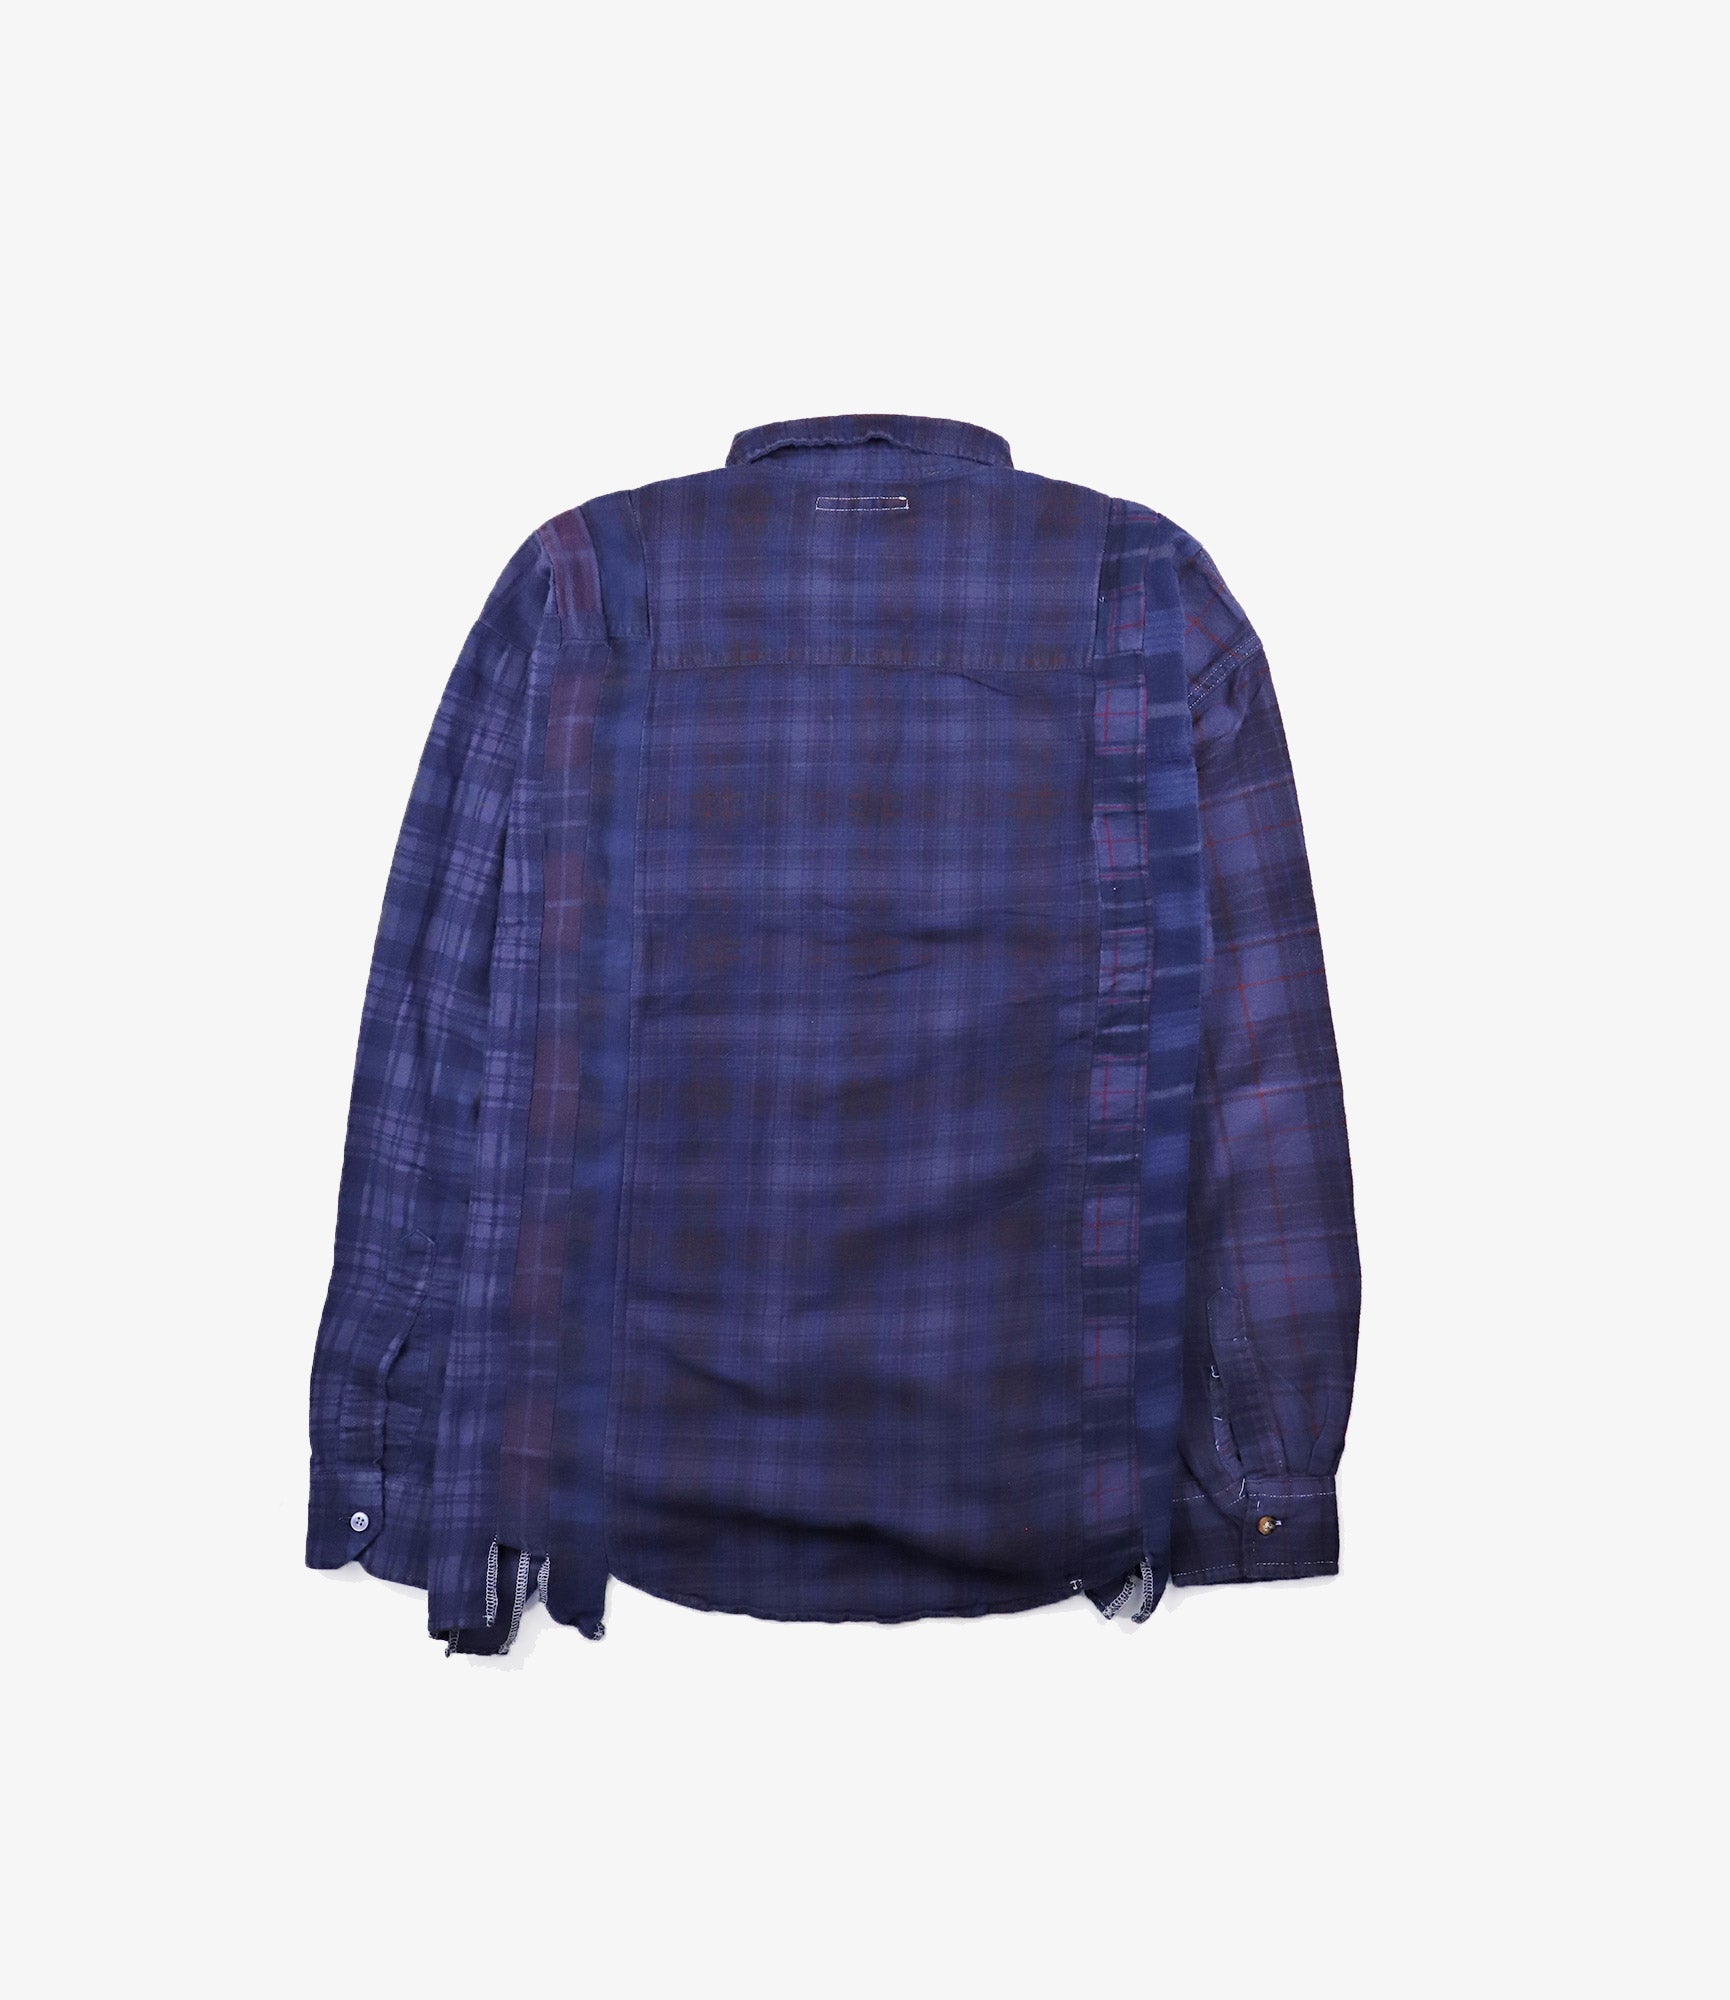 Rebuild by Needles Flannel Shirt - 7 Cuts Shirt / Over Dye - Purple